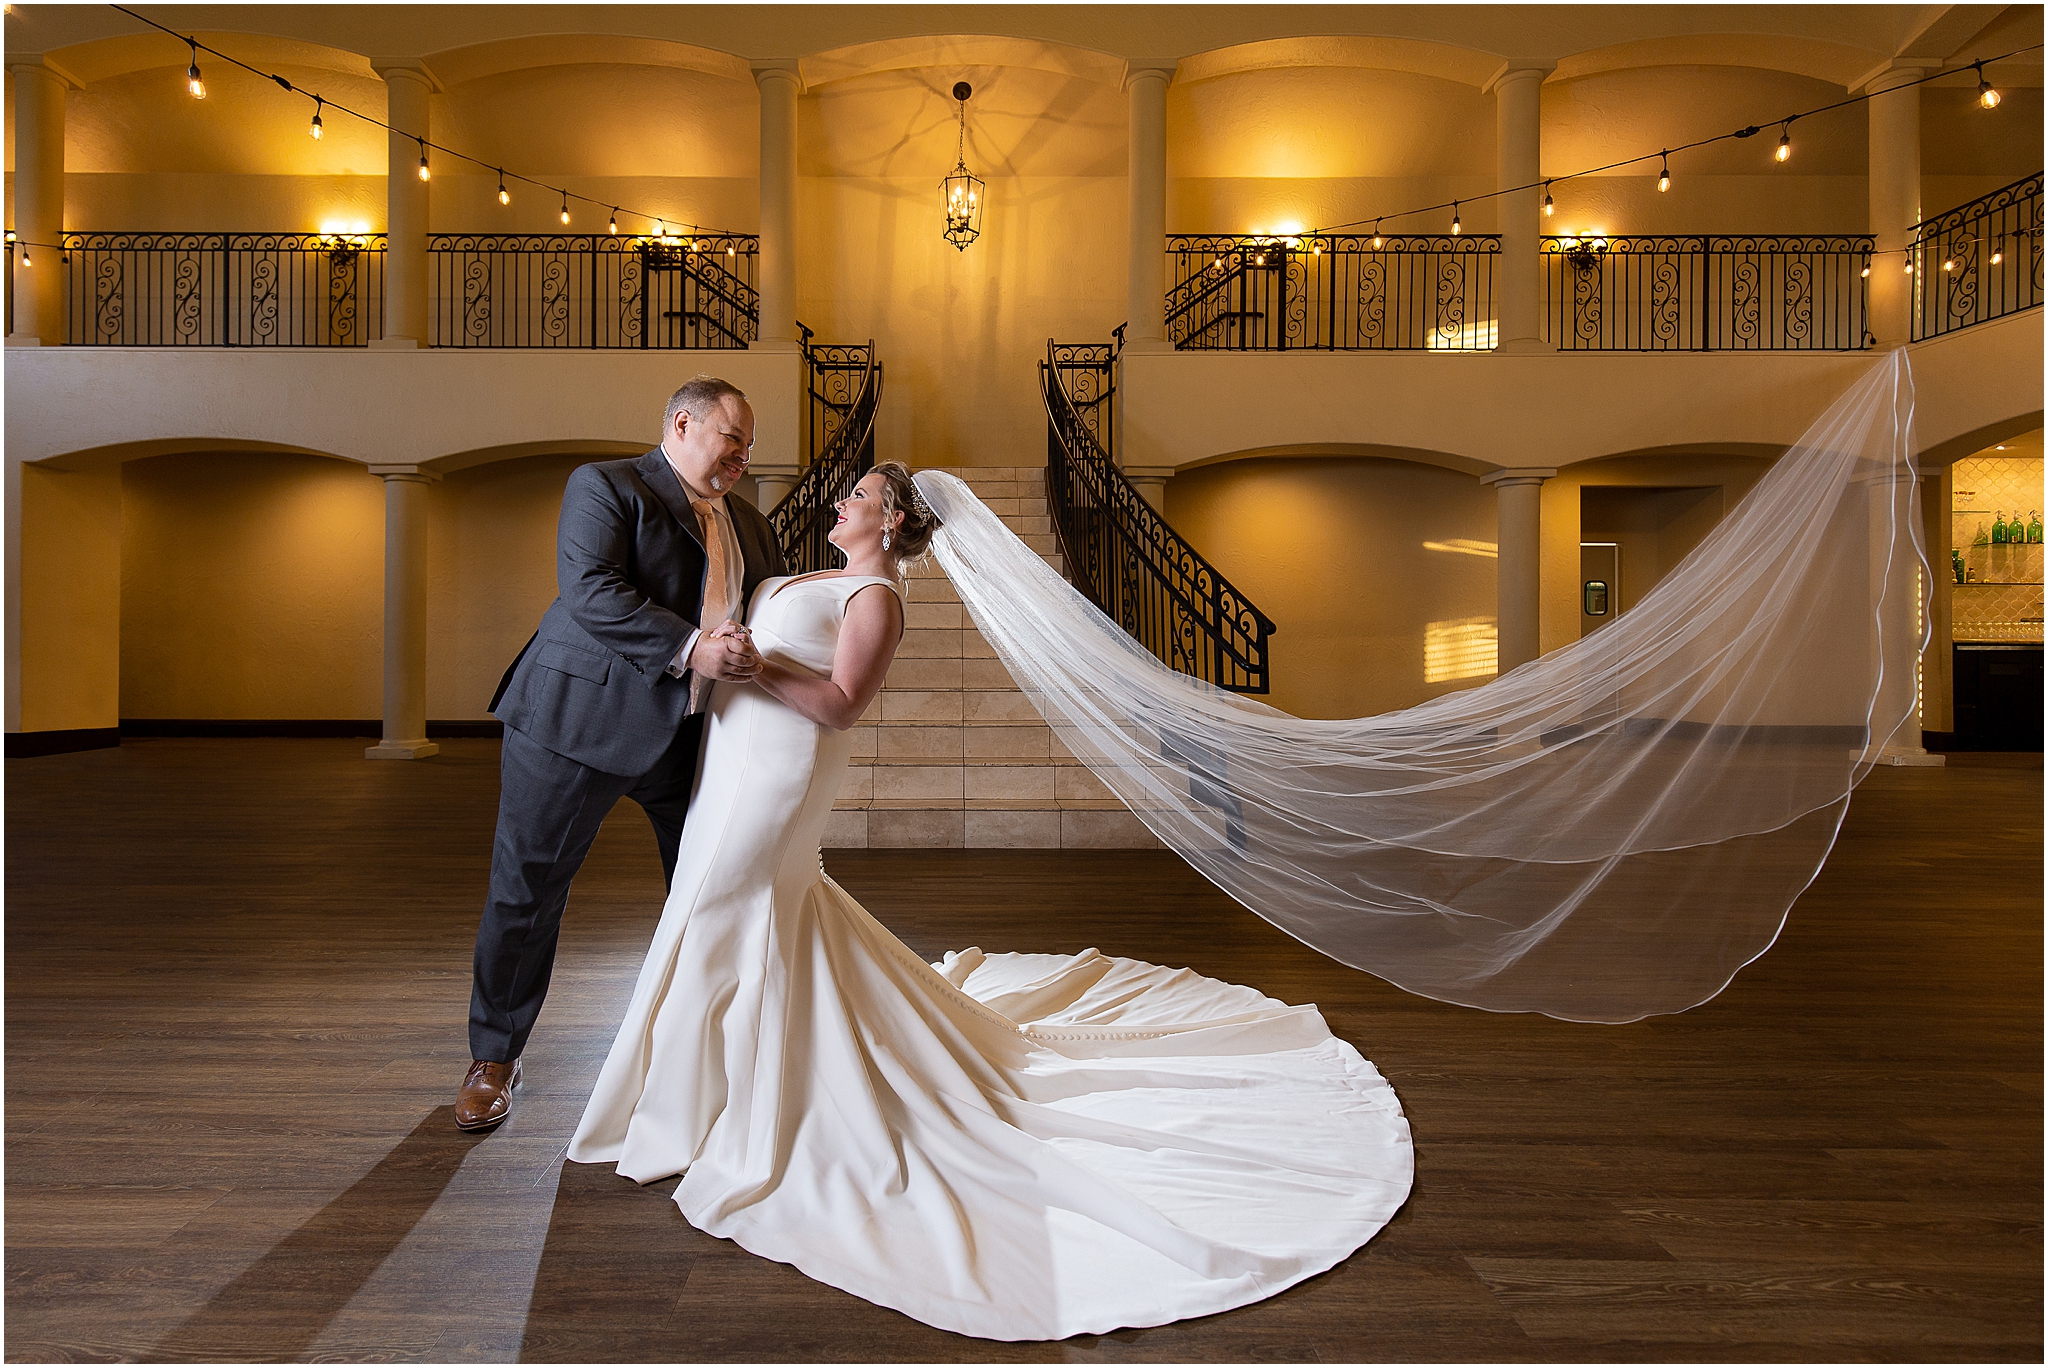 epic floating veil ballroom photo from ana villa wedding venue in dallas by stefani Ciotti photography